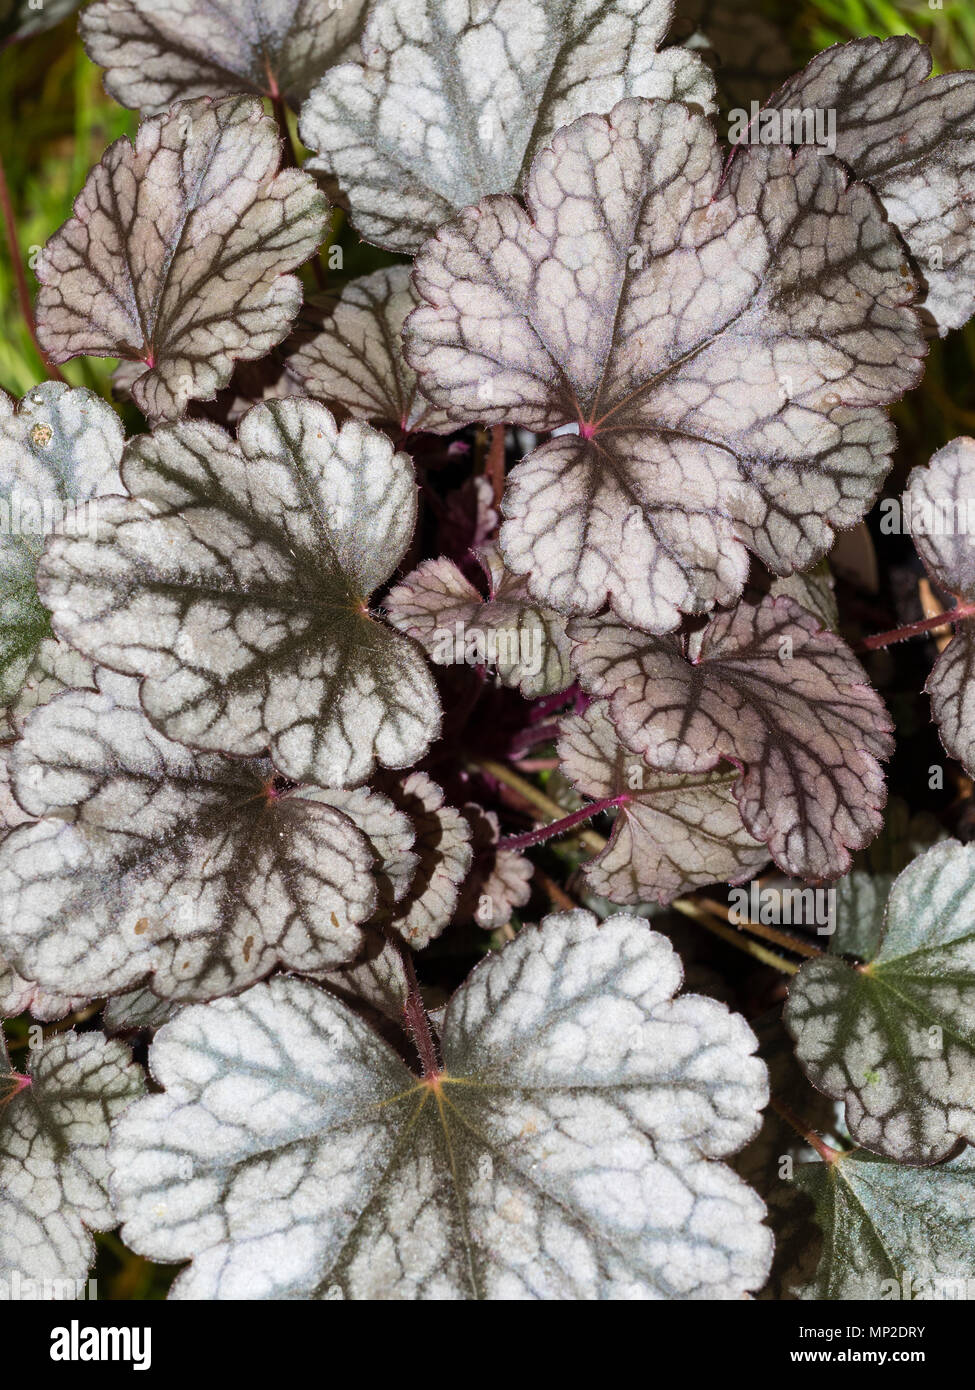 Black veined silvery leaves of the ornamental hardy everhreen perennial, Heuchera 'Sugar Frosting' Stock Photo